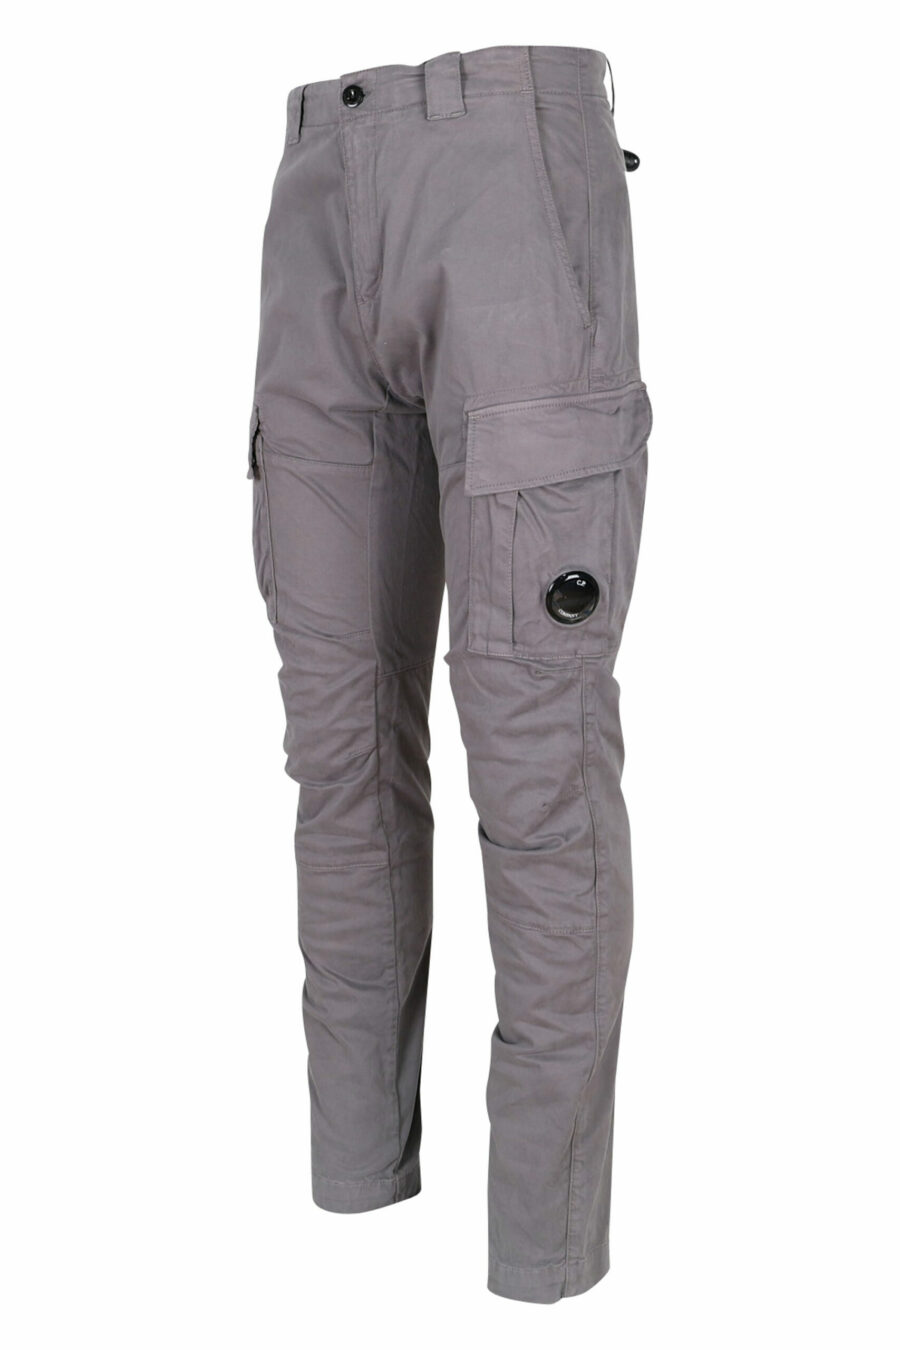 Pantalon cargo gris anthracite en satin stretch et lentille logo - 7620943597400 1 scaled